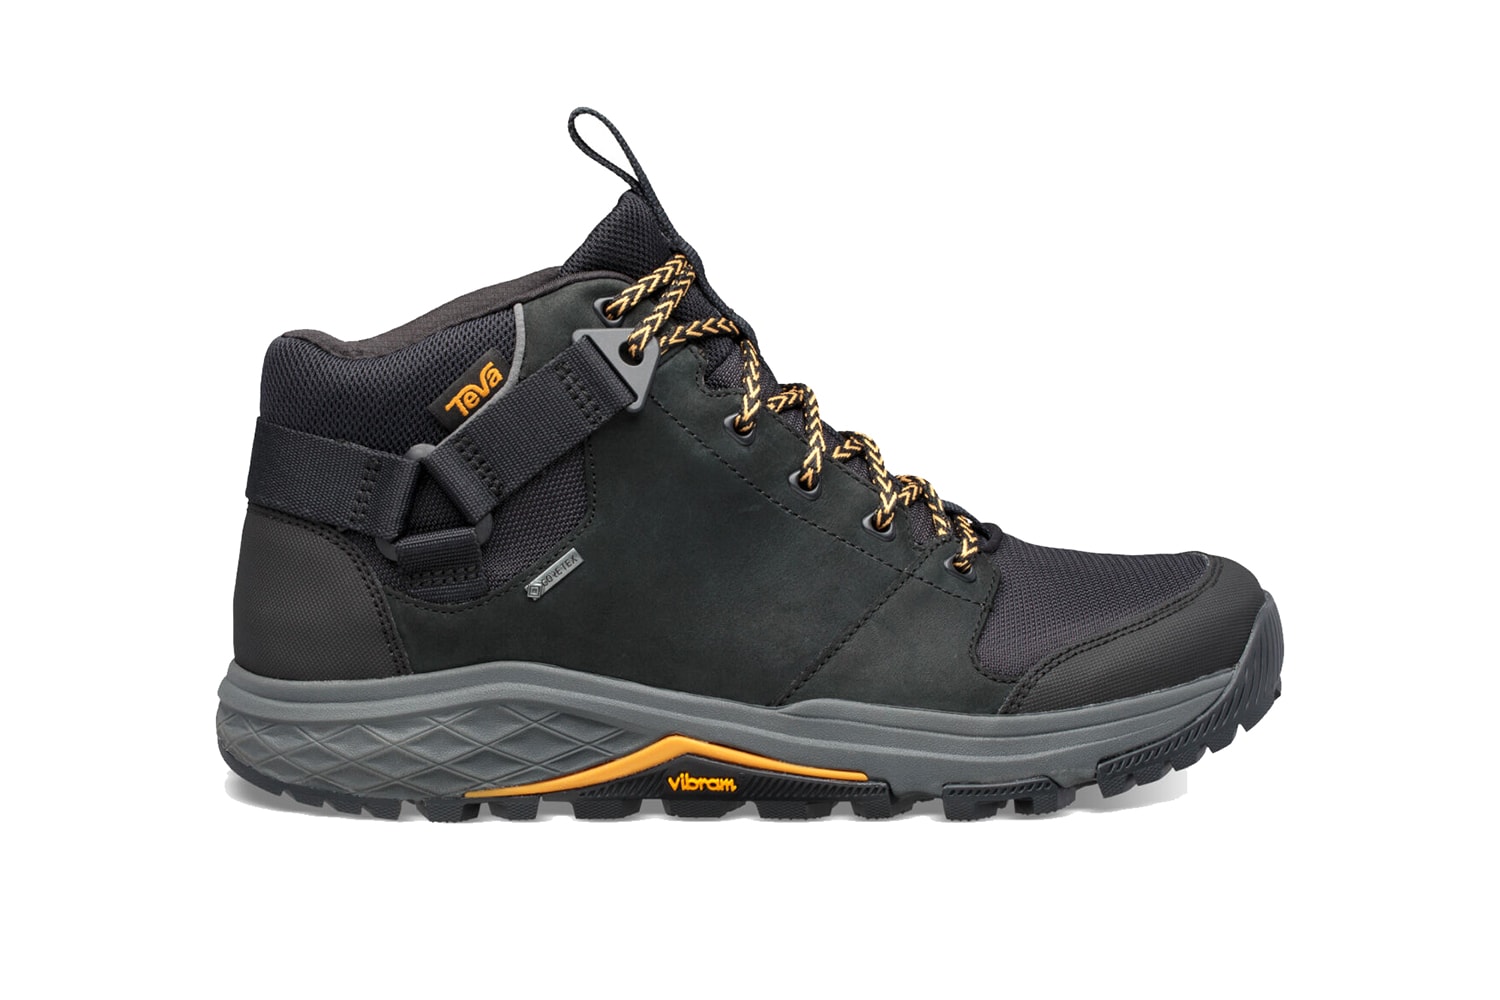 Teva Grandview GTX  footwear boots vibram gore-tex outdoors shoes hiking trail running mega grip rain waterproof 